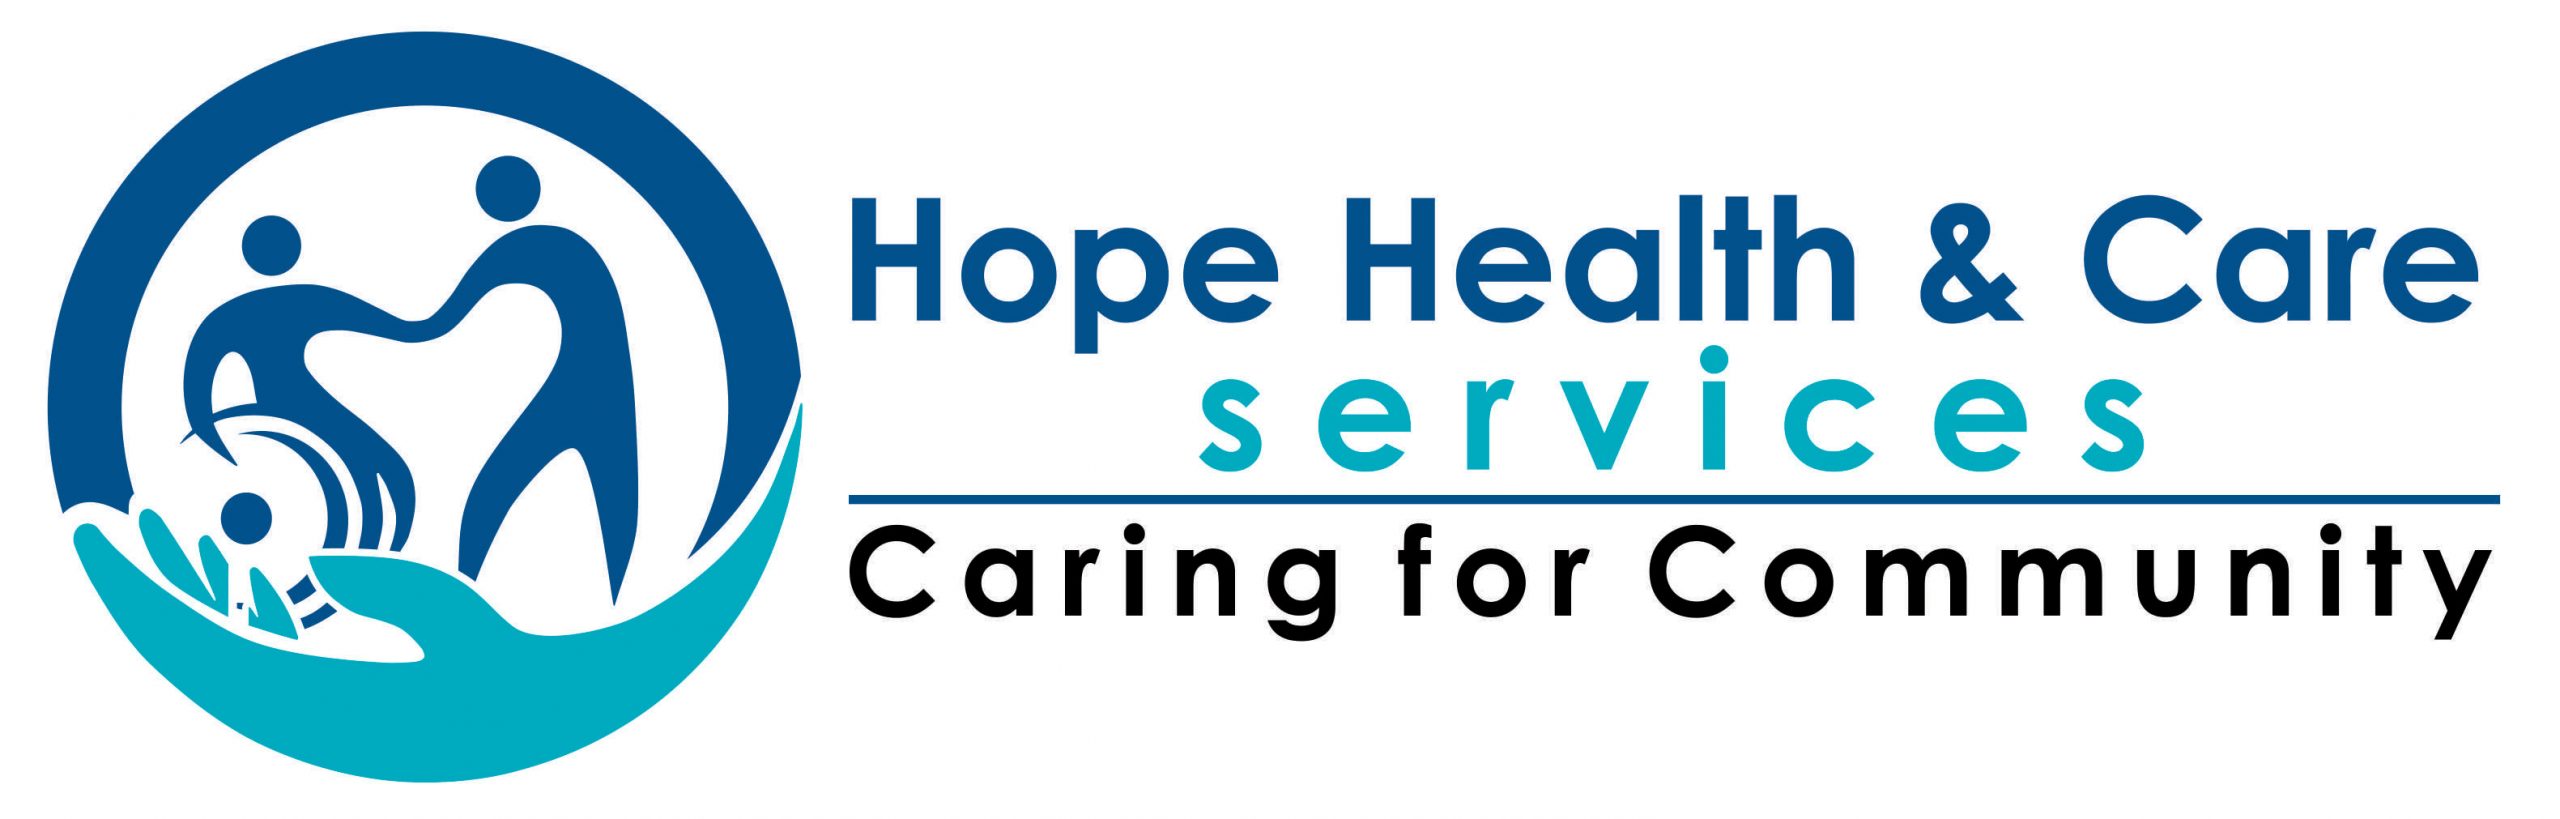 Hope Health & Care Services Pty Ltd